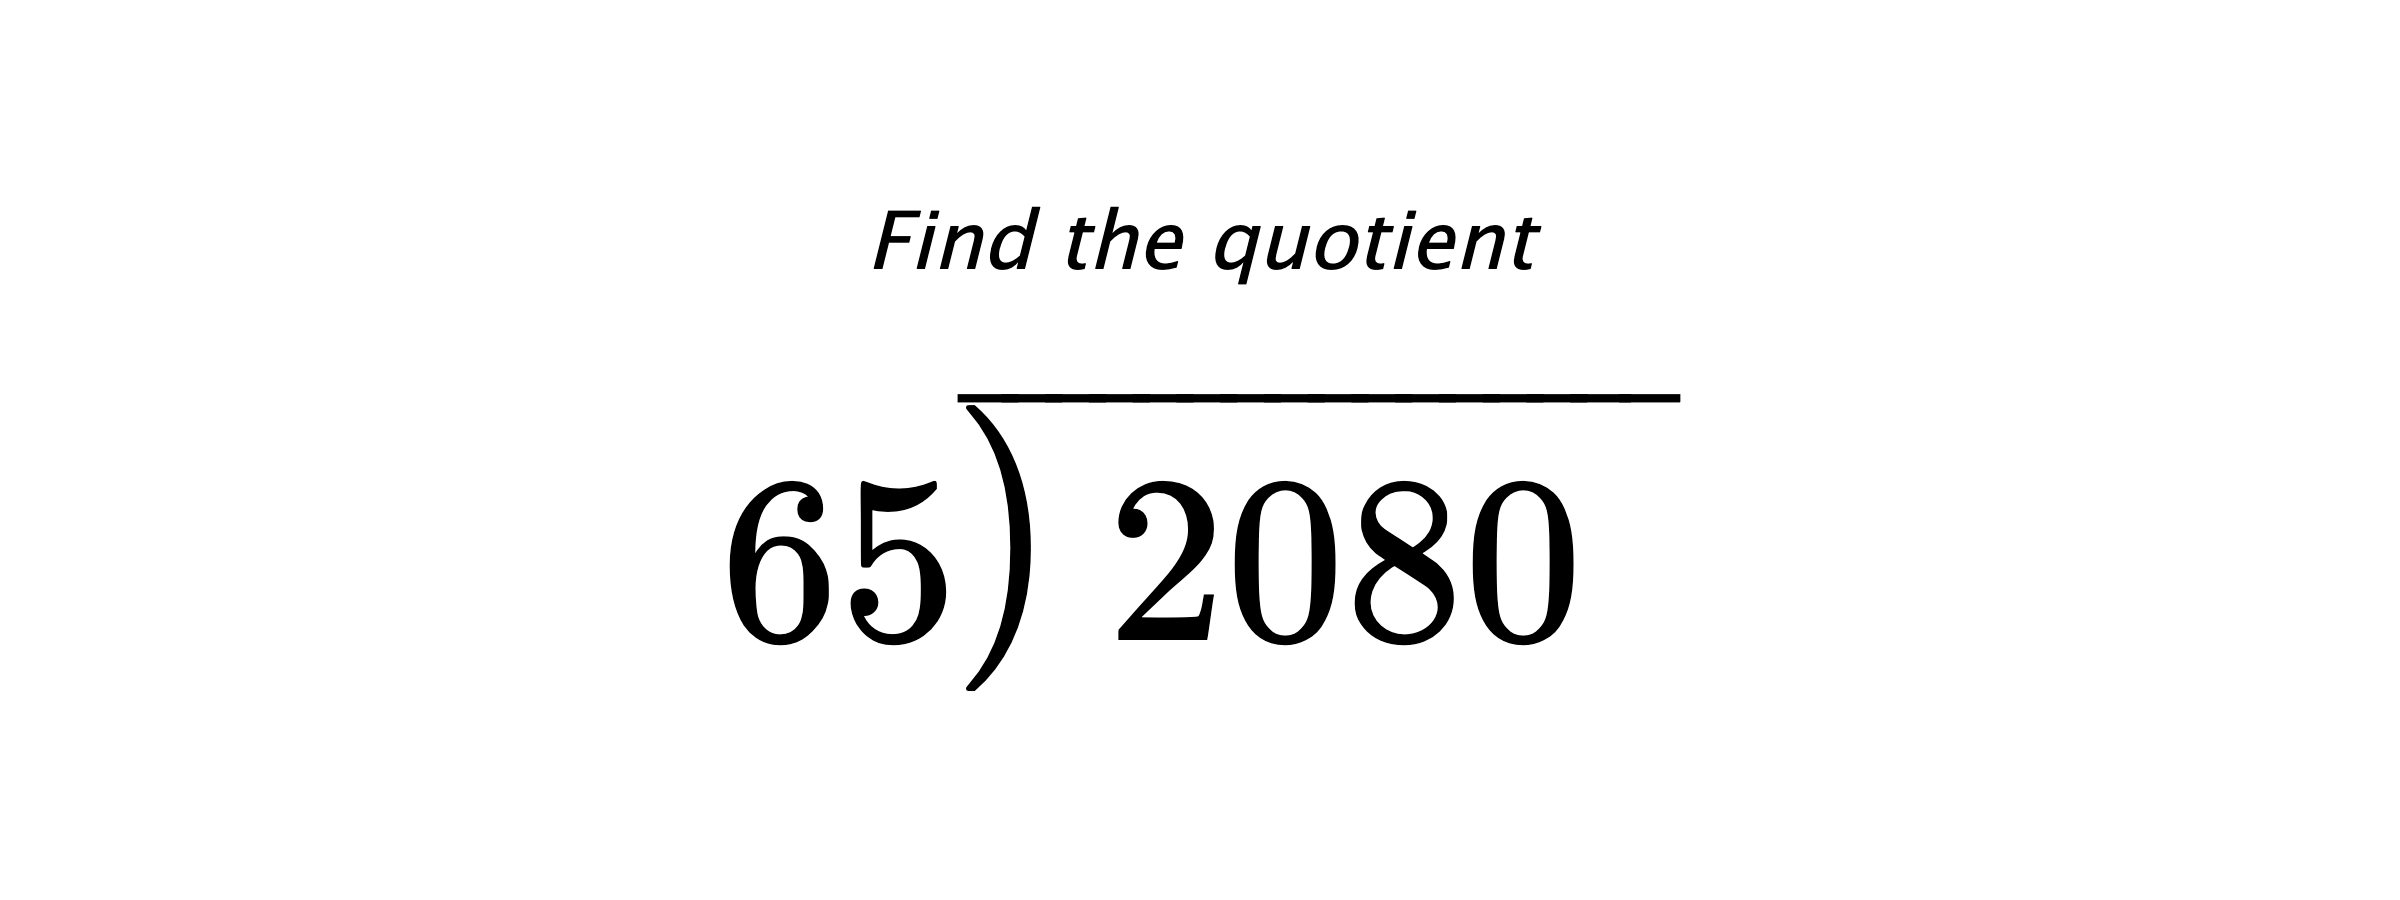 Find the quotient $ 65{\overline{\smash{\raise.3ex\hbox{$\big)$}}\,2080\phantom{)}}} $